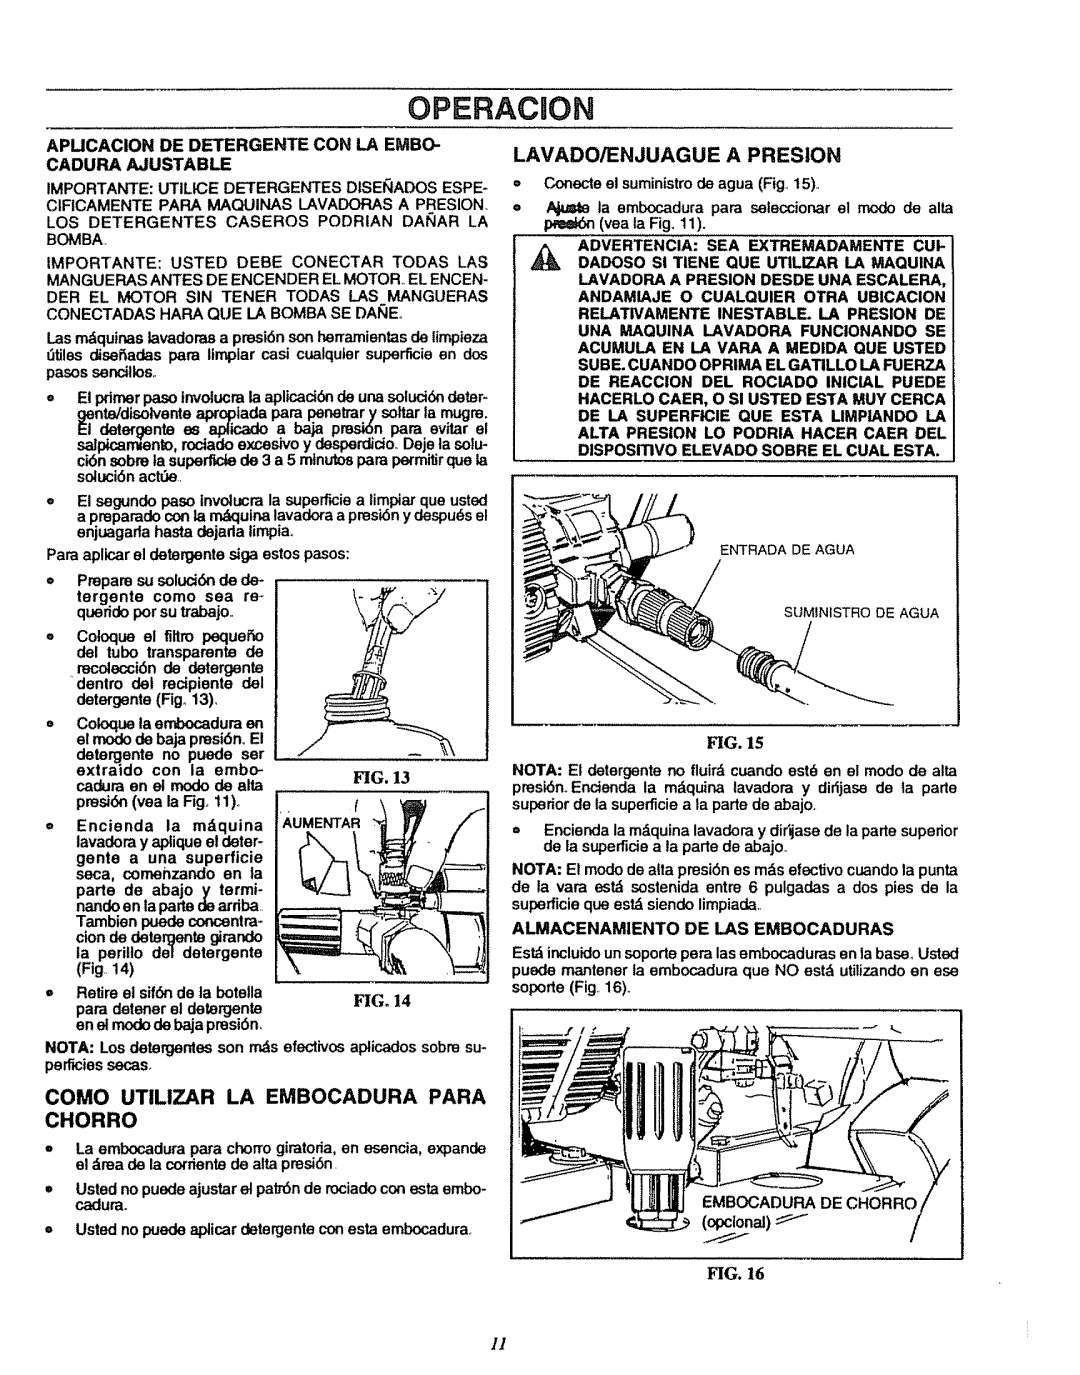 Sears 580.7515 manual Operacion, Como Utilizar La Embocadura Para Chorro, Lavado/Enjuague A Presion 